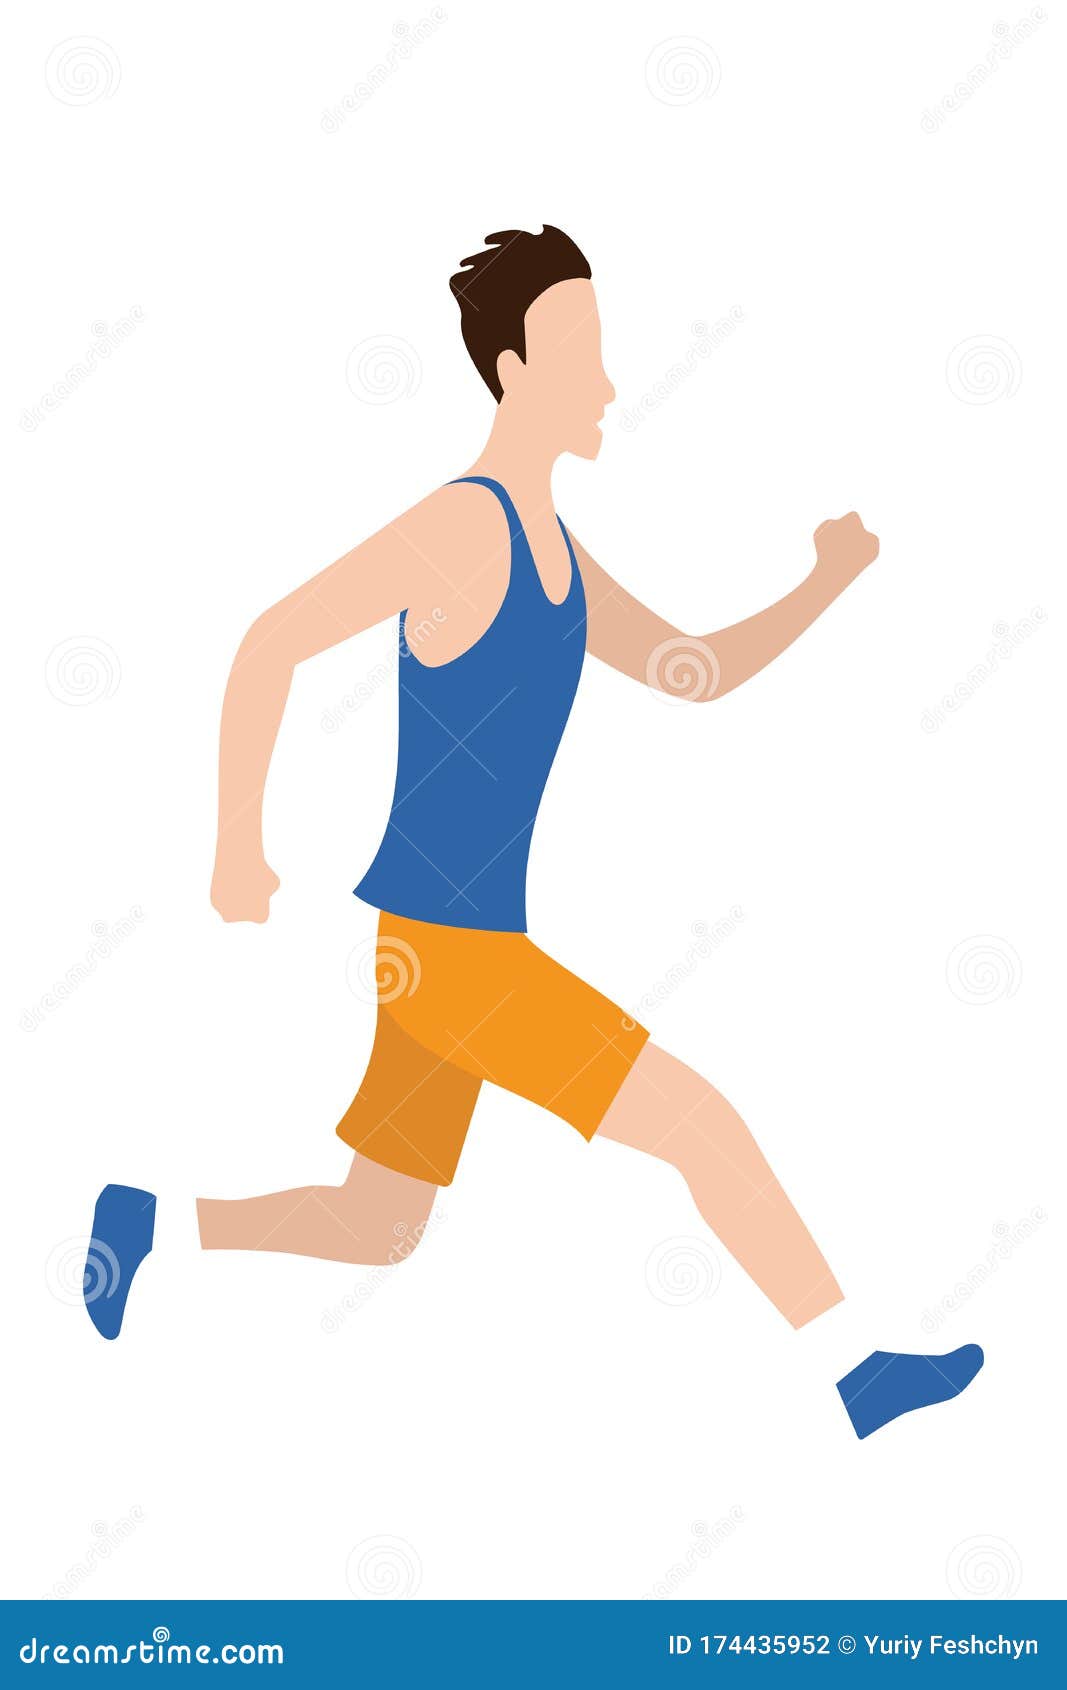 Jpeg Illustration of Running Man in Flat Design Style. Sport. Run ...